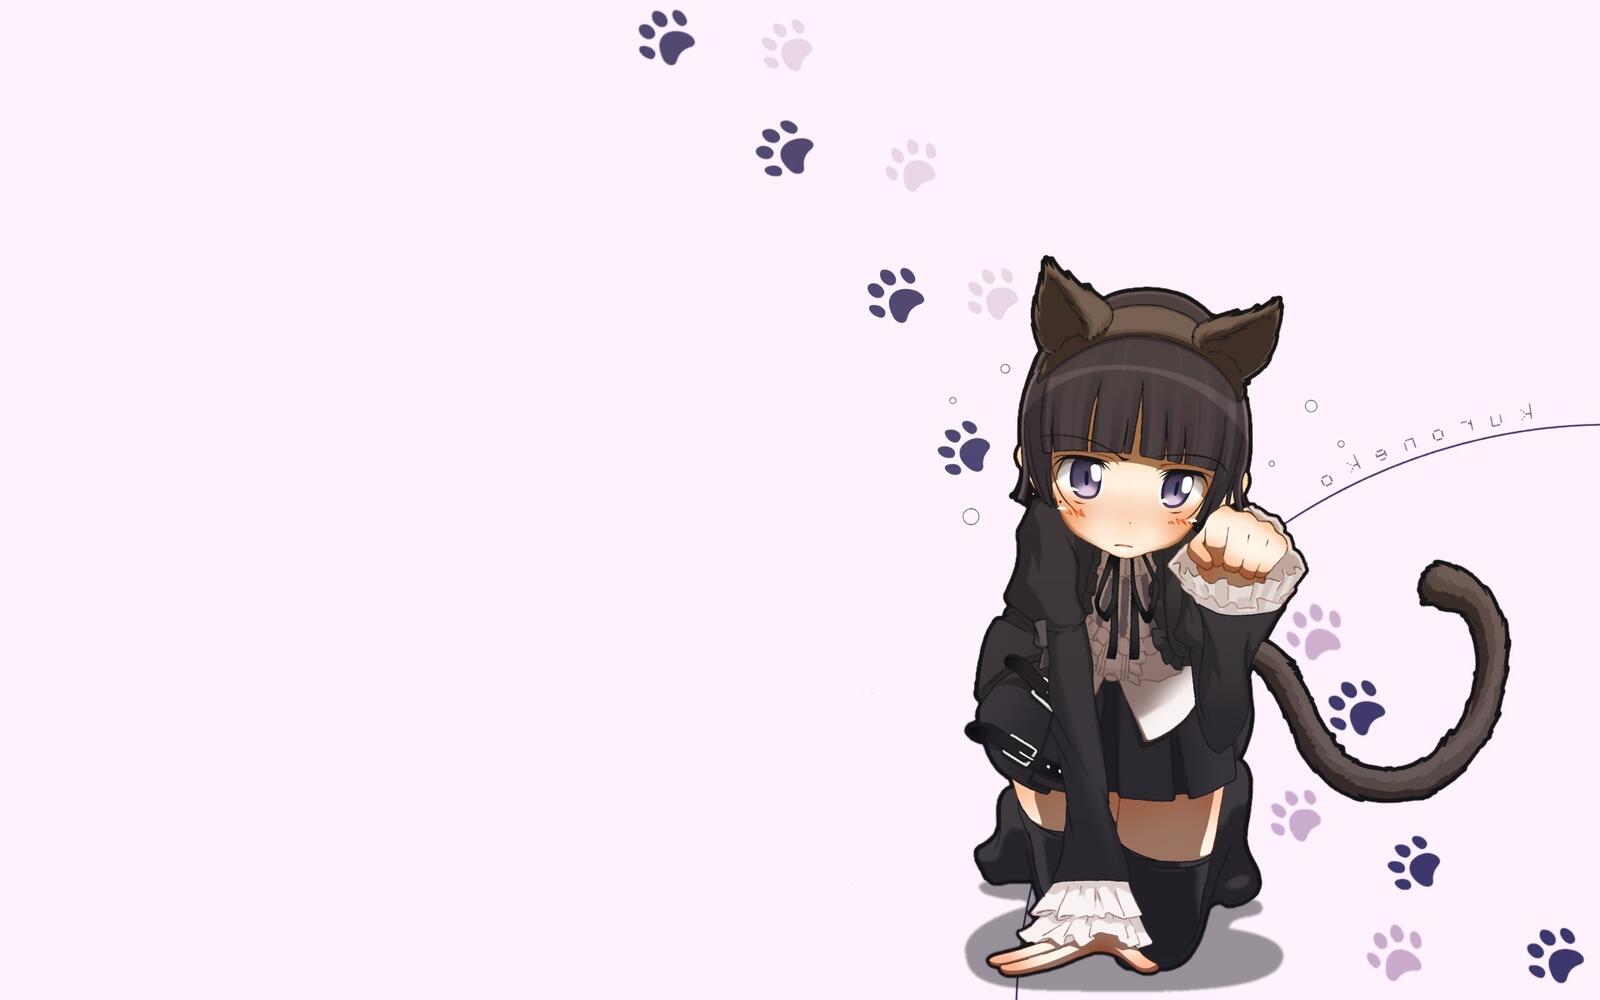 Wallpapers illustration an anime girl cat on the desktop